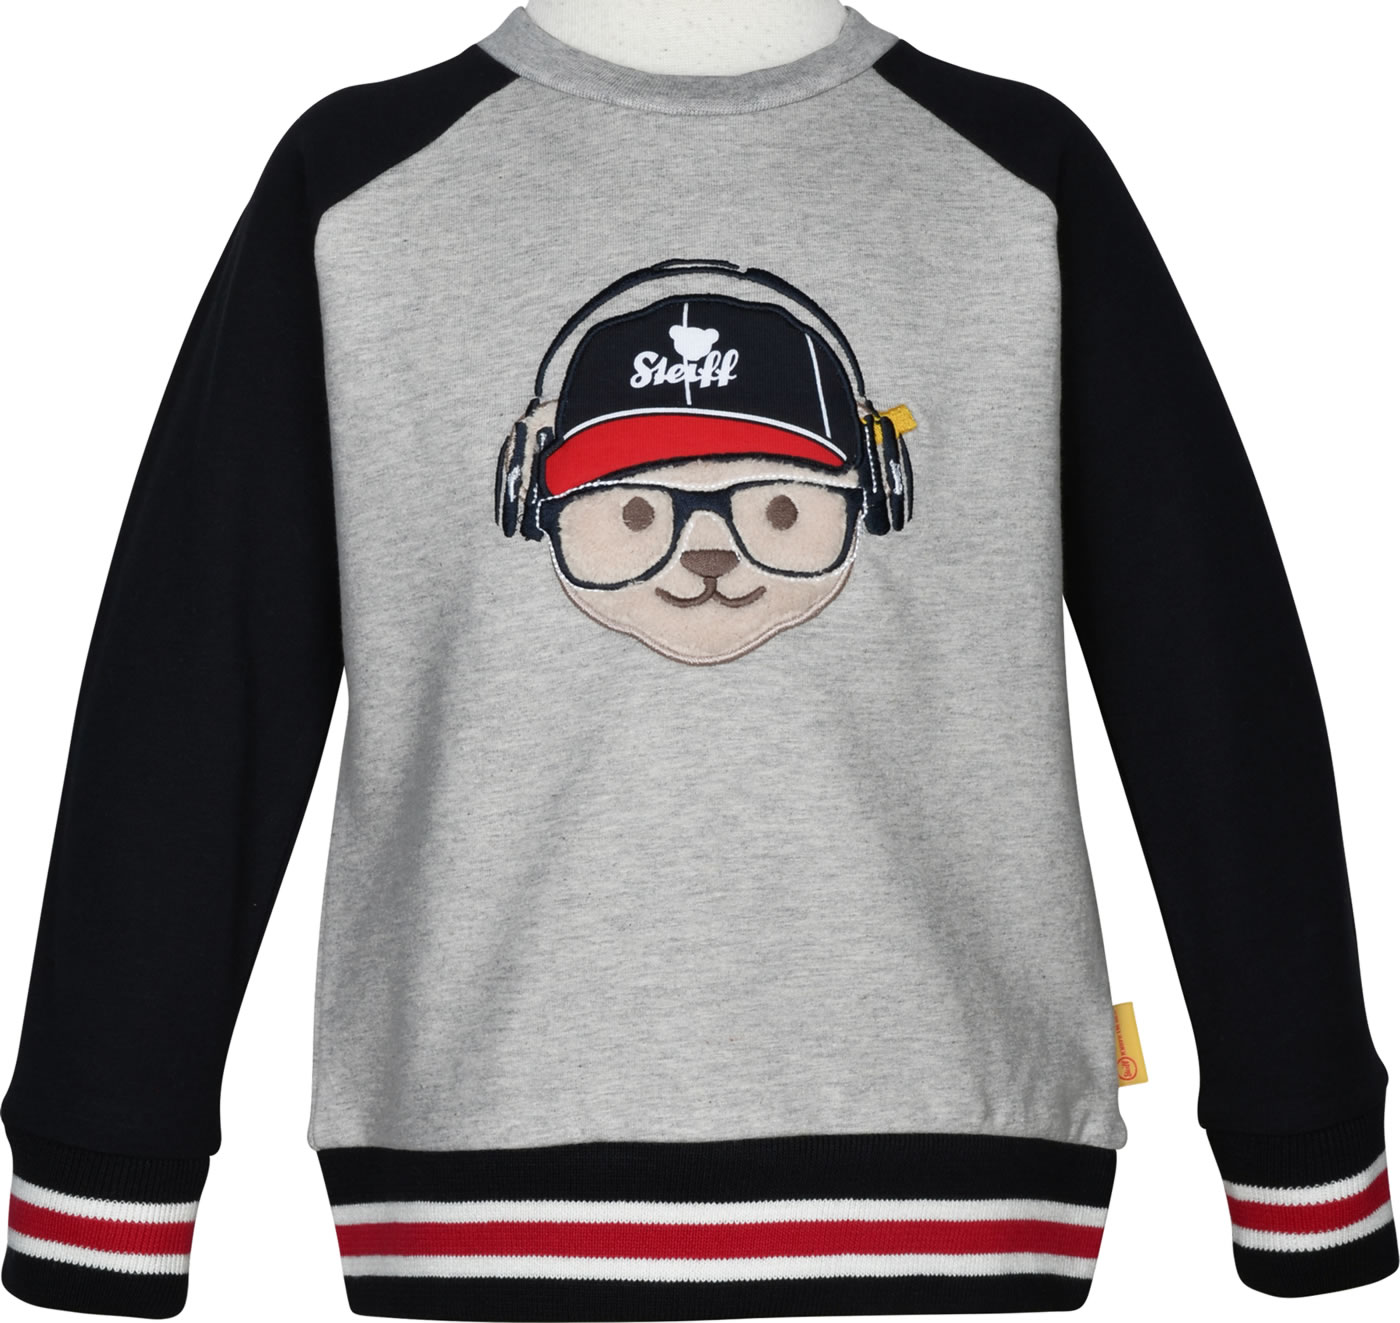 STEIFF®  Mädchen Sweatshirt Shirt großer Bär Blumenkranz 80-122 F/S 2021 NEU! 